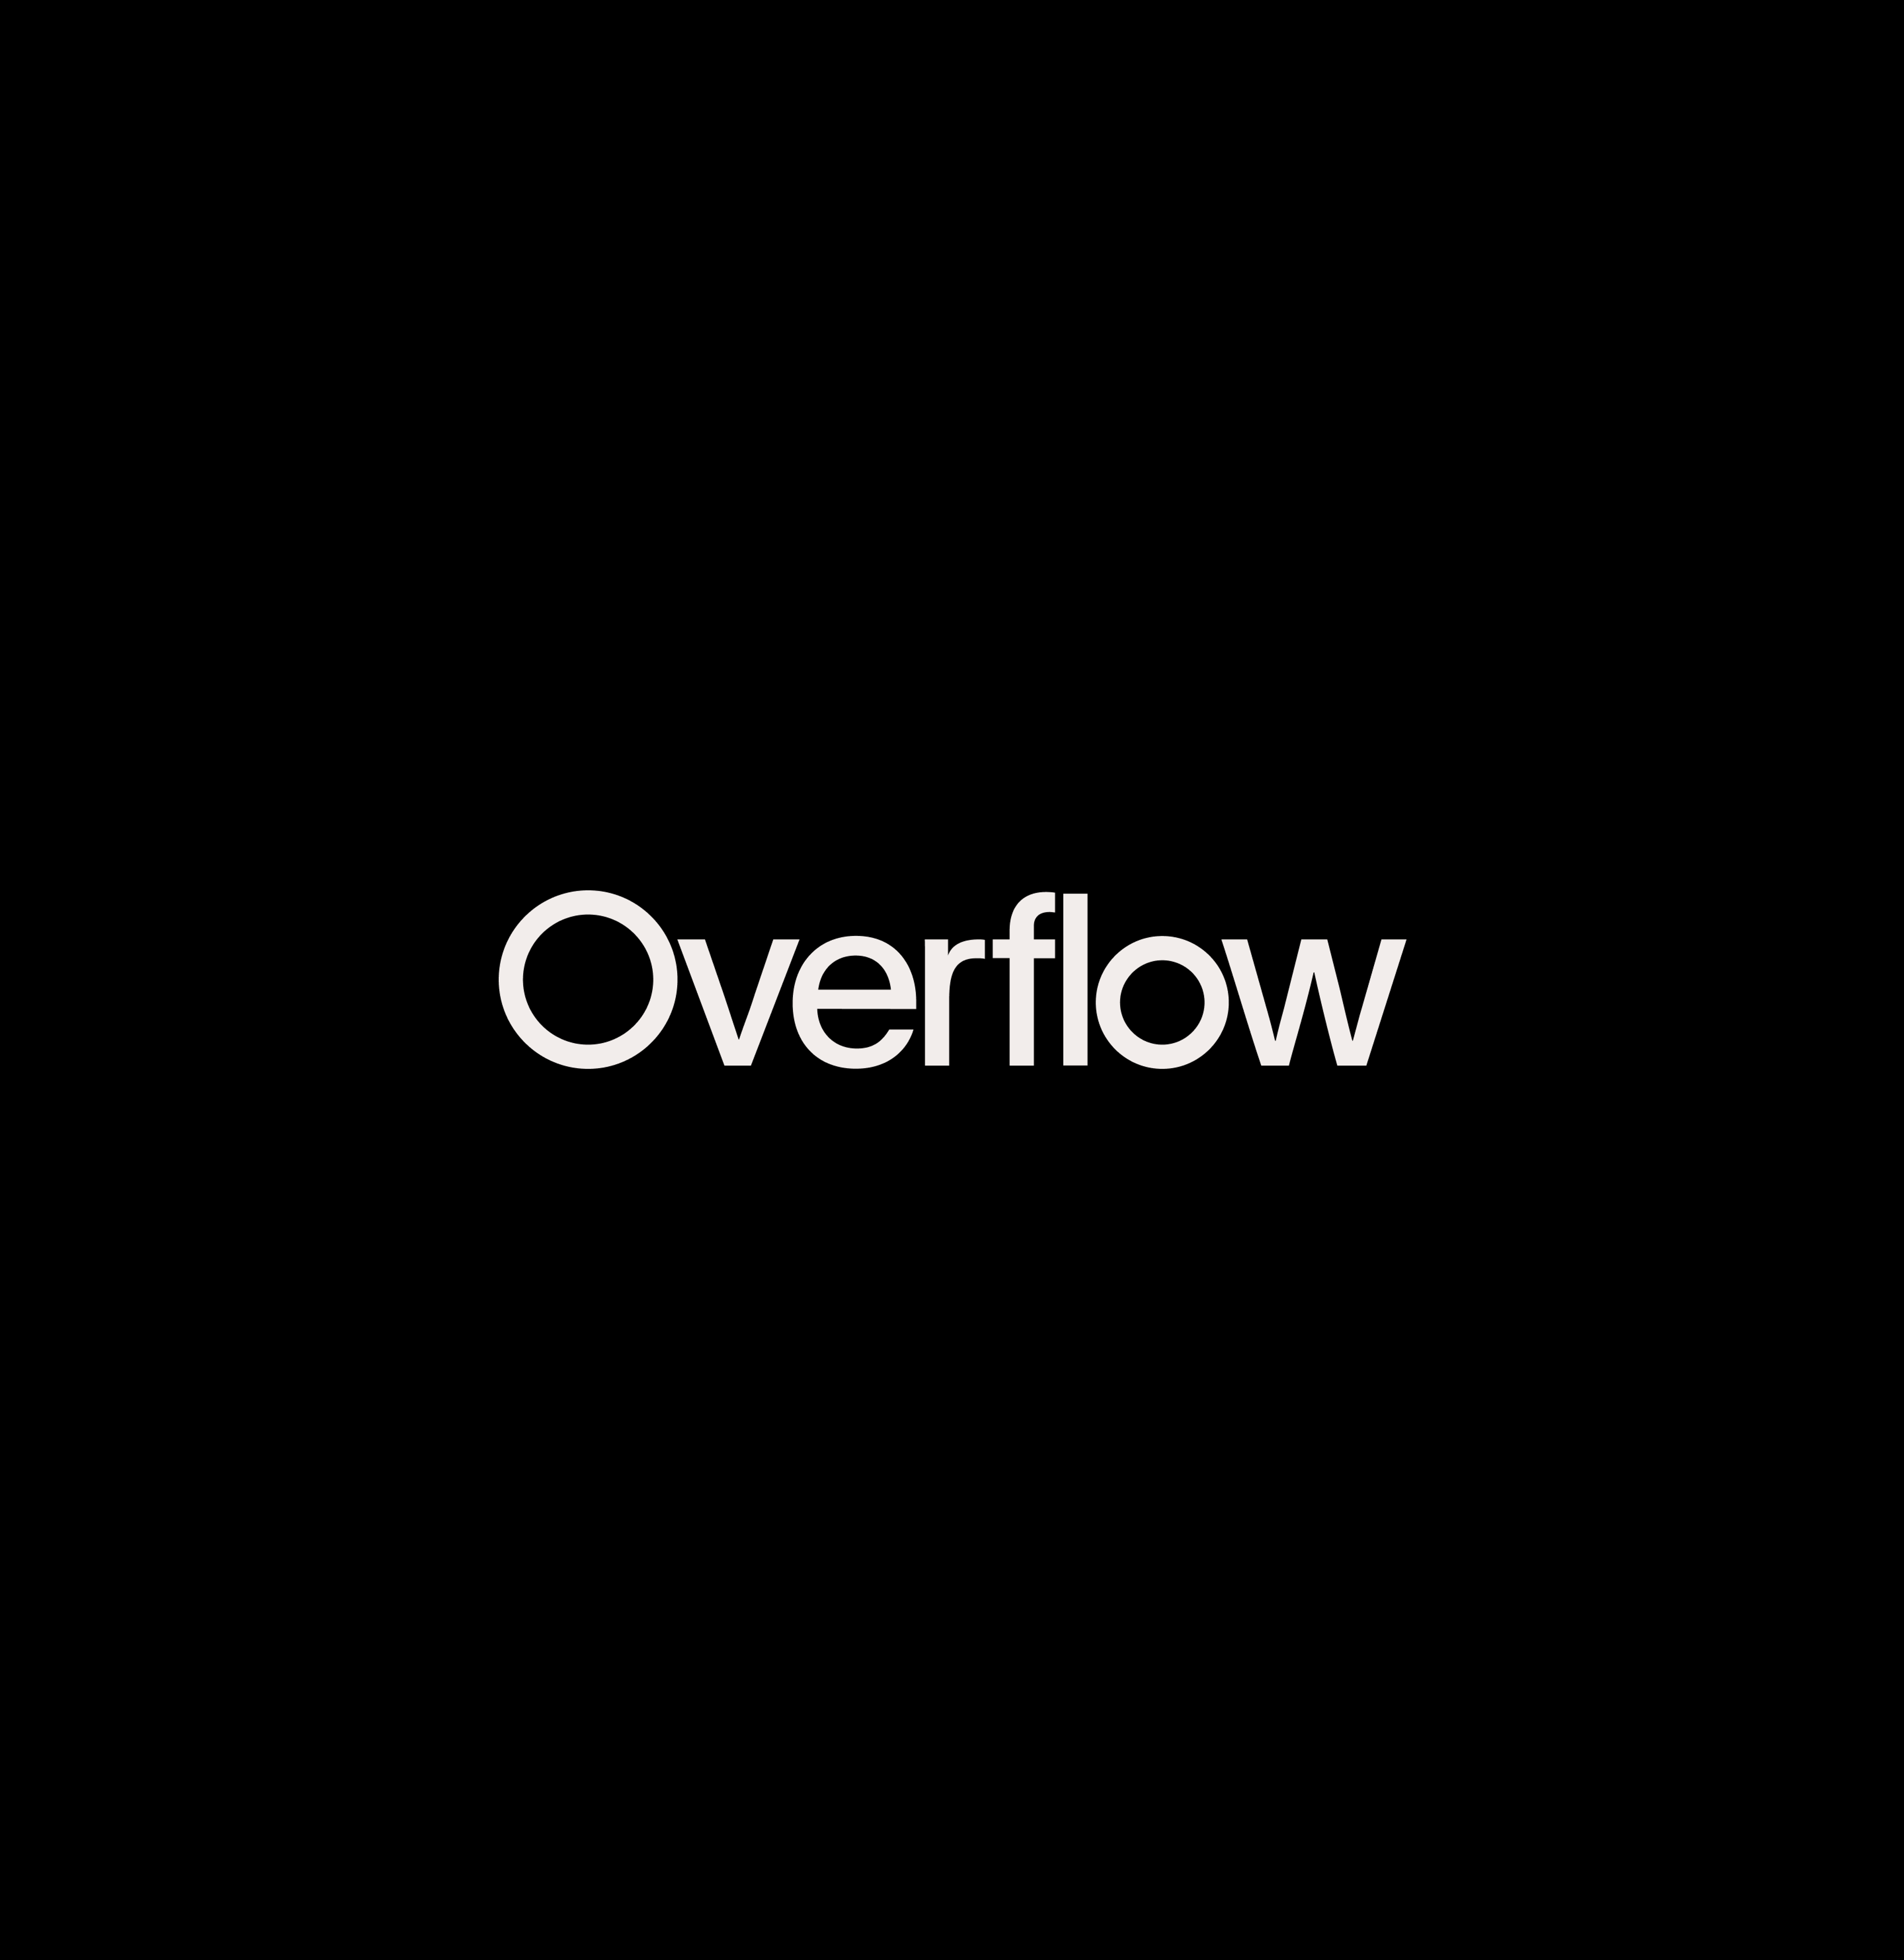 overflow text logomark